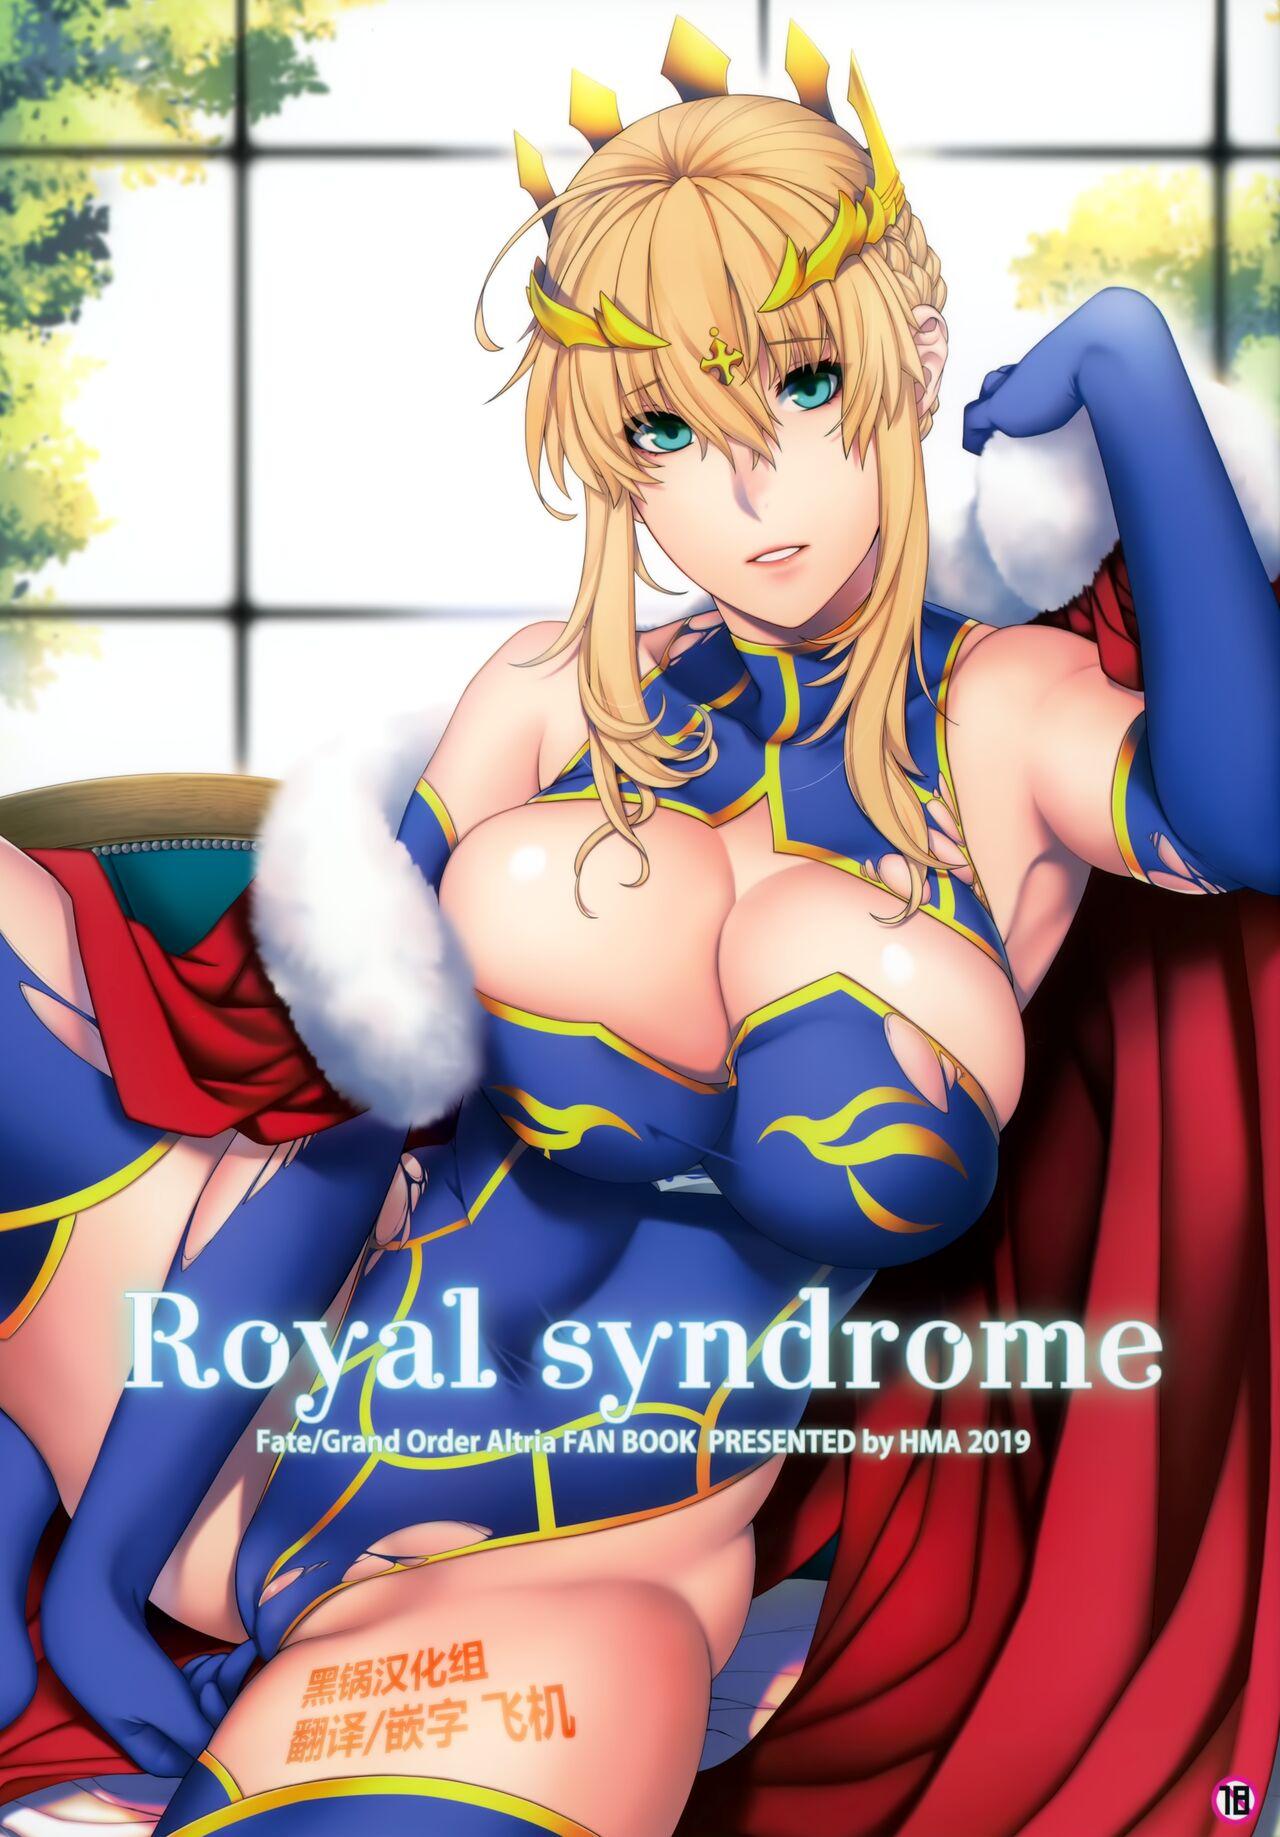 Royal syndrome 0